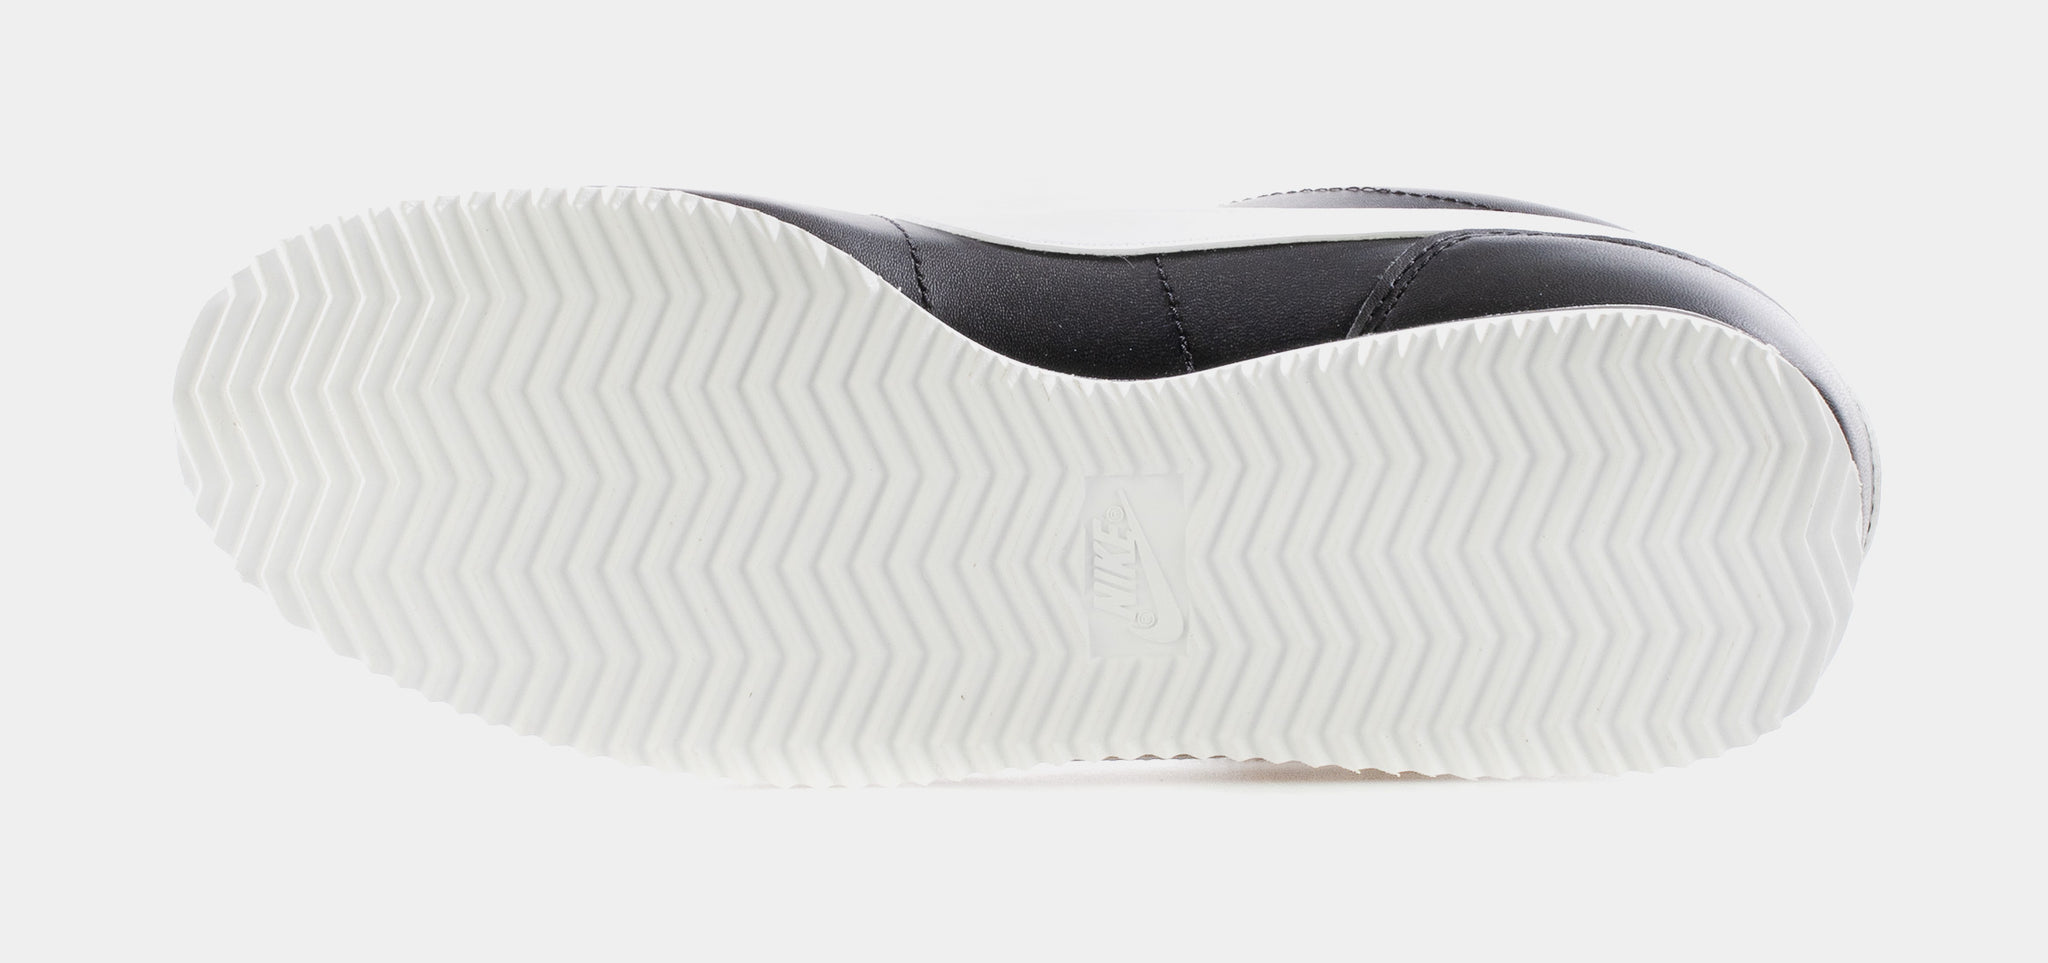 Nike Cortez Basic Leather Men's Shoe - Hibbett